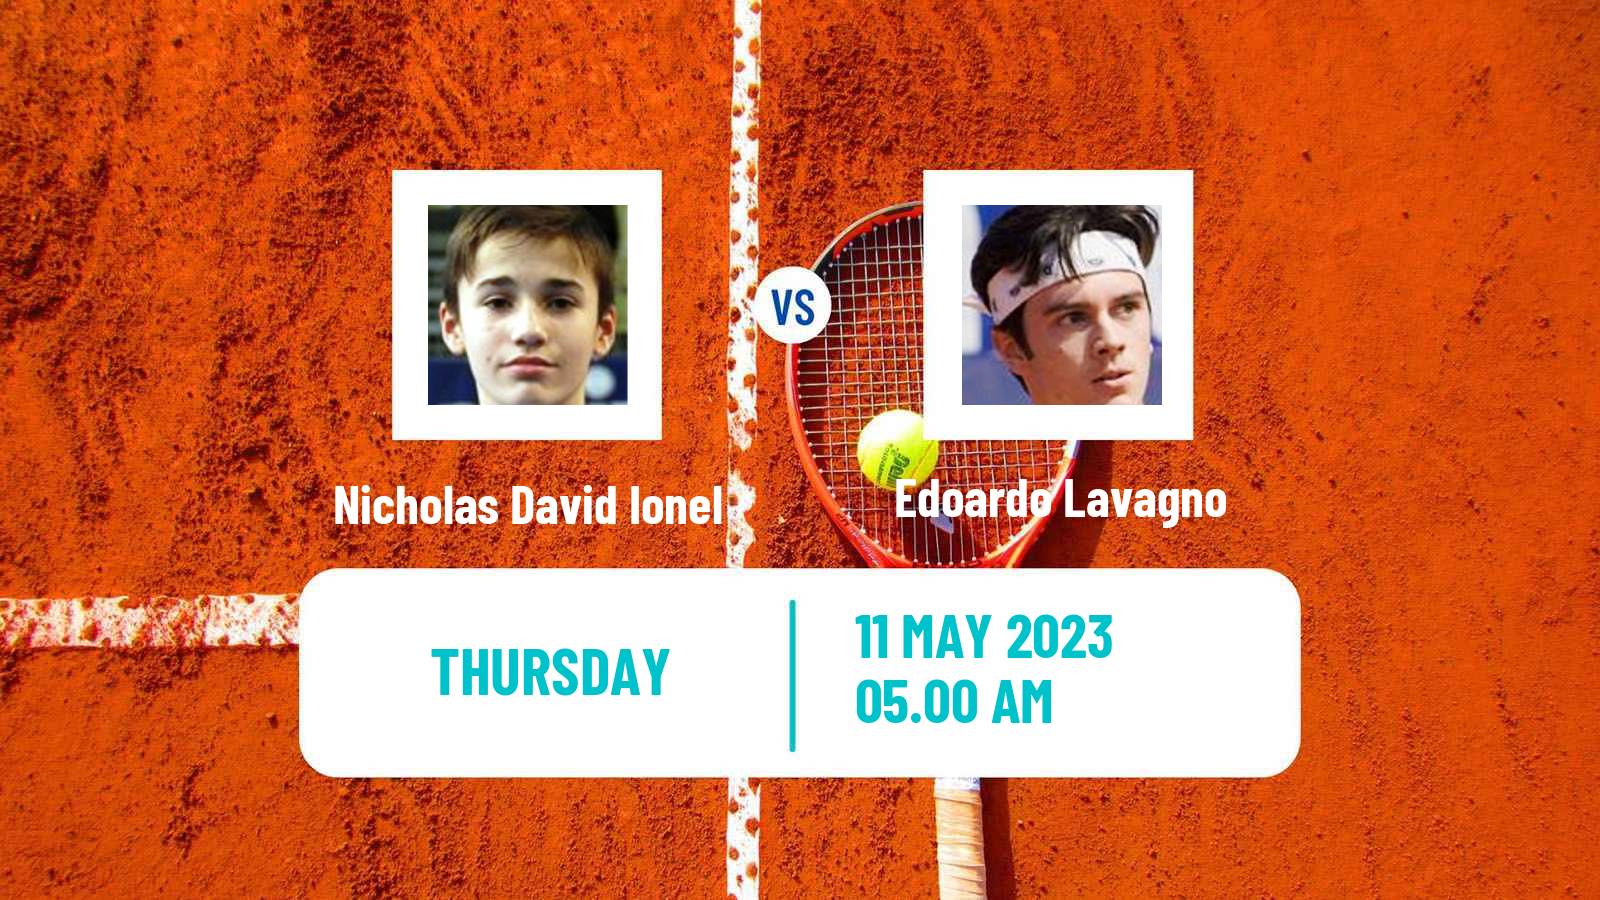 Tennis ATP Challenger Nicholas David Ionel - Edoardo Lavagno